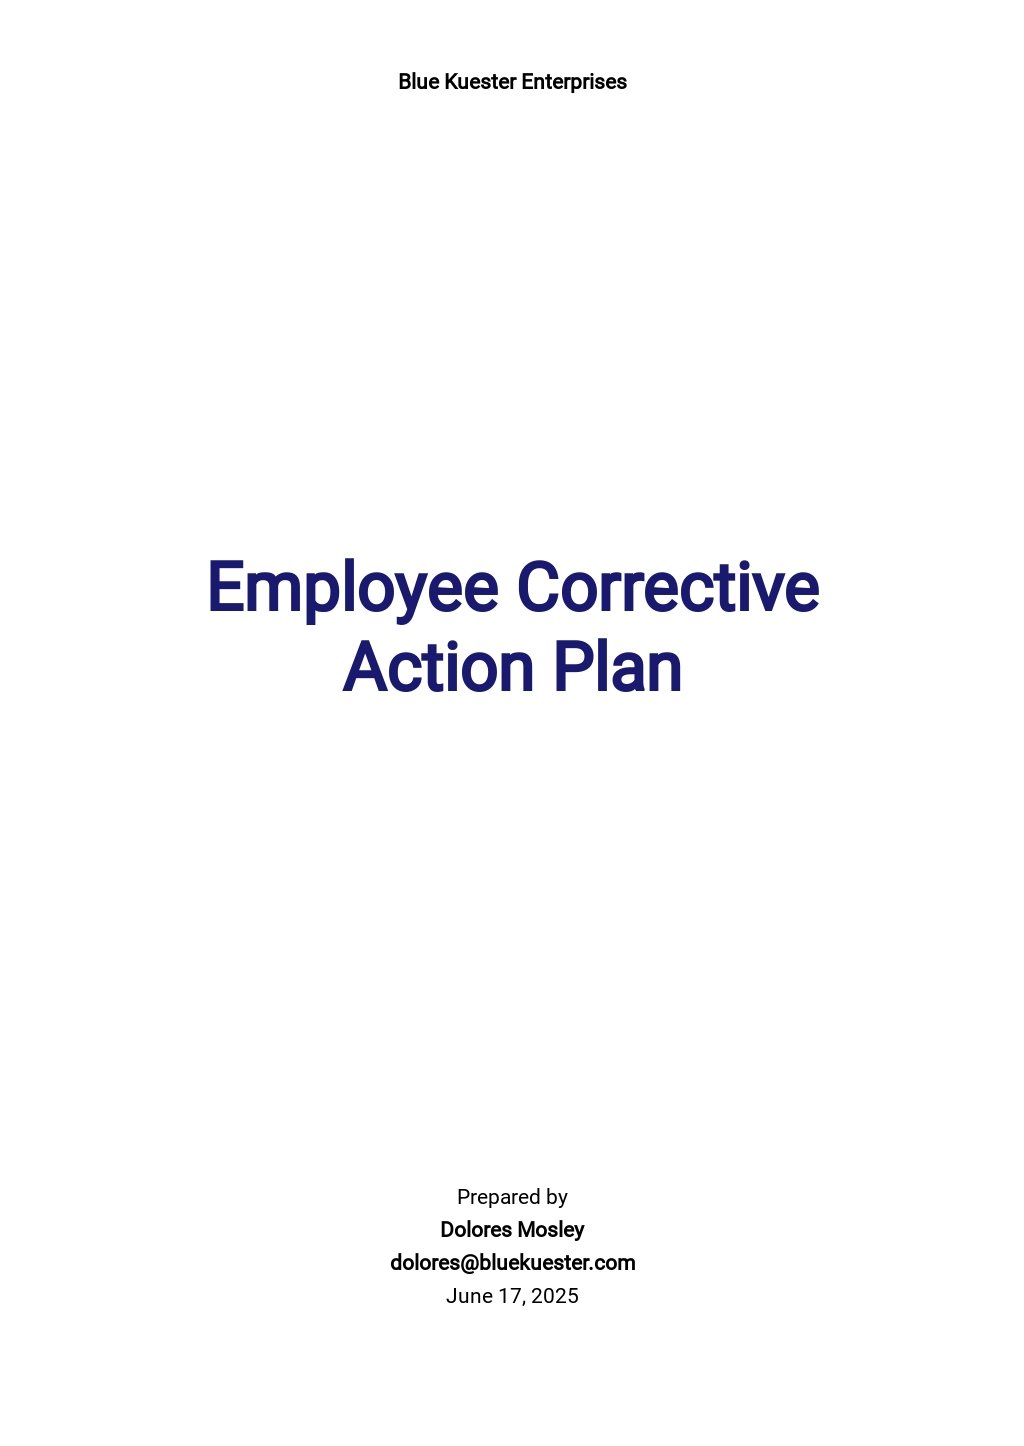 Employee Corrective Action Plan Template.jpe